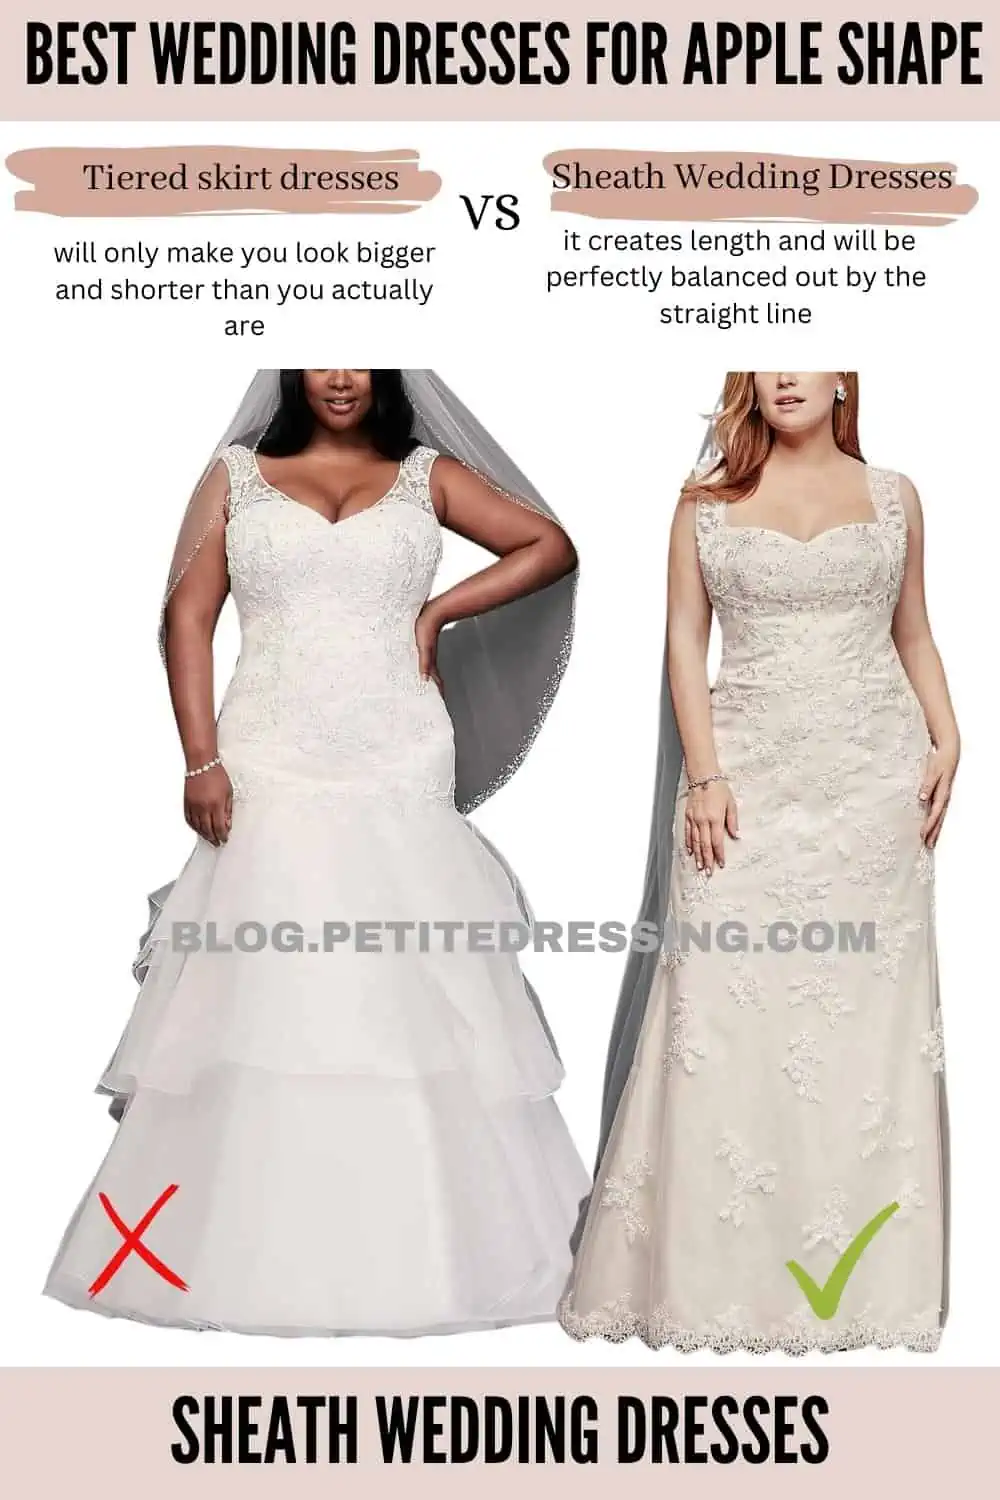 How to Choose Royal Blue Bridesmaid Dresses Based on Body Shape - JJ's House